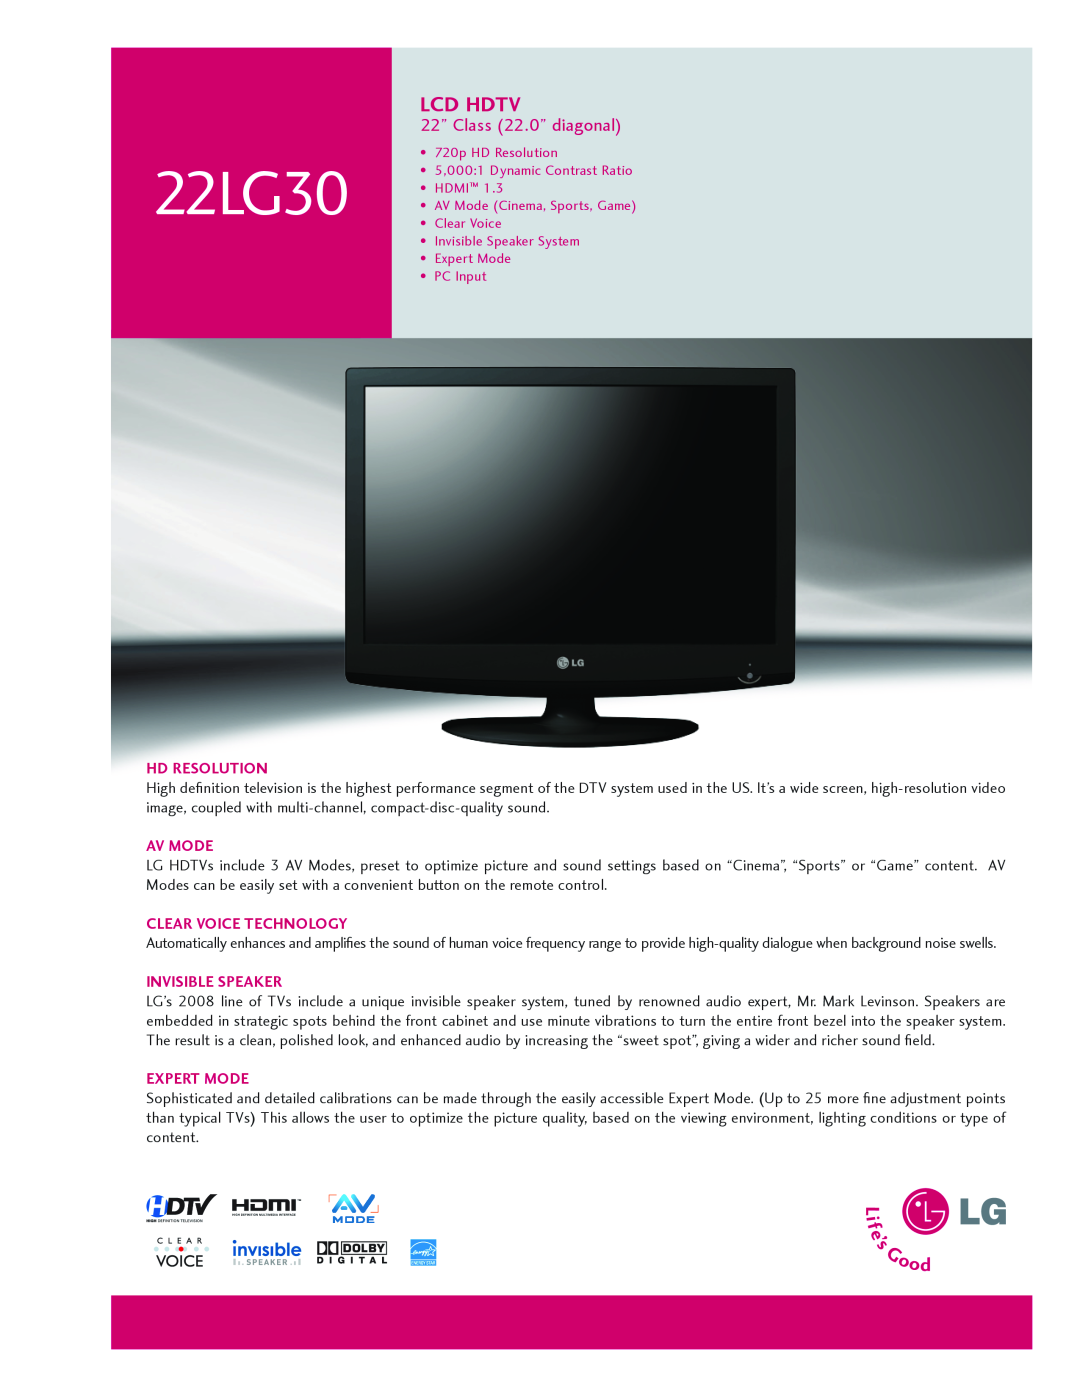 LG Electronics 2230 manual Lcd Hdtv, 22” Class 22.0” diagonal, 22LG30, HD Resolution, Av Mode, Clear Voice Technology 